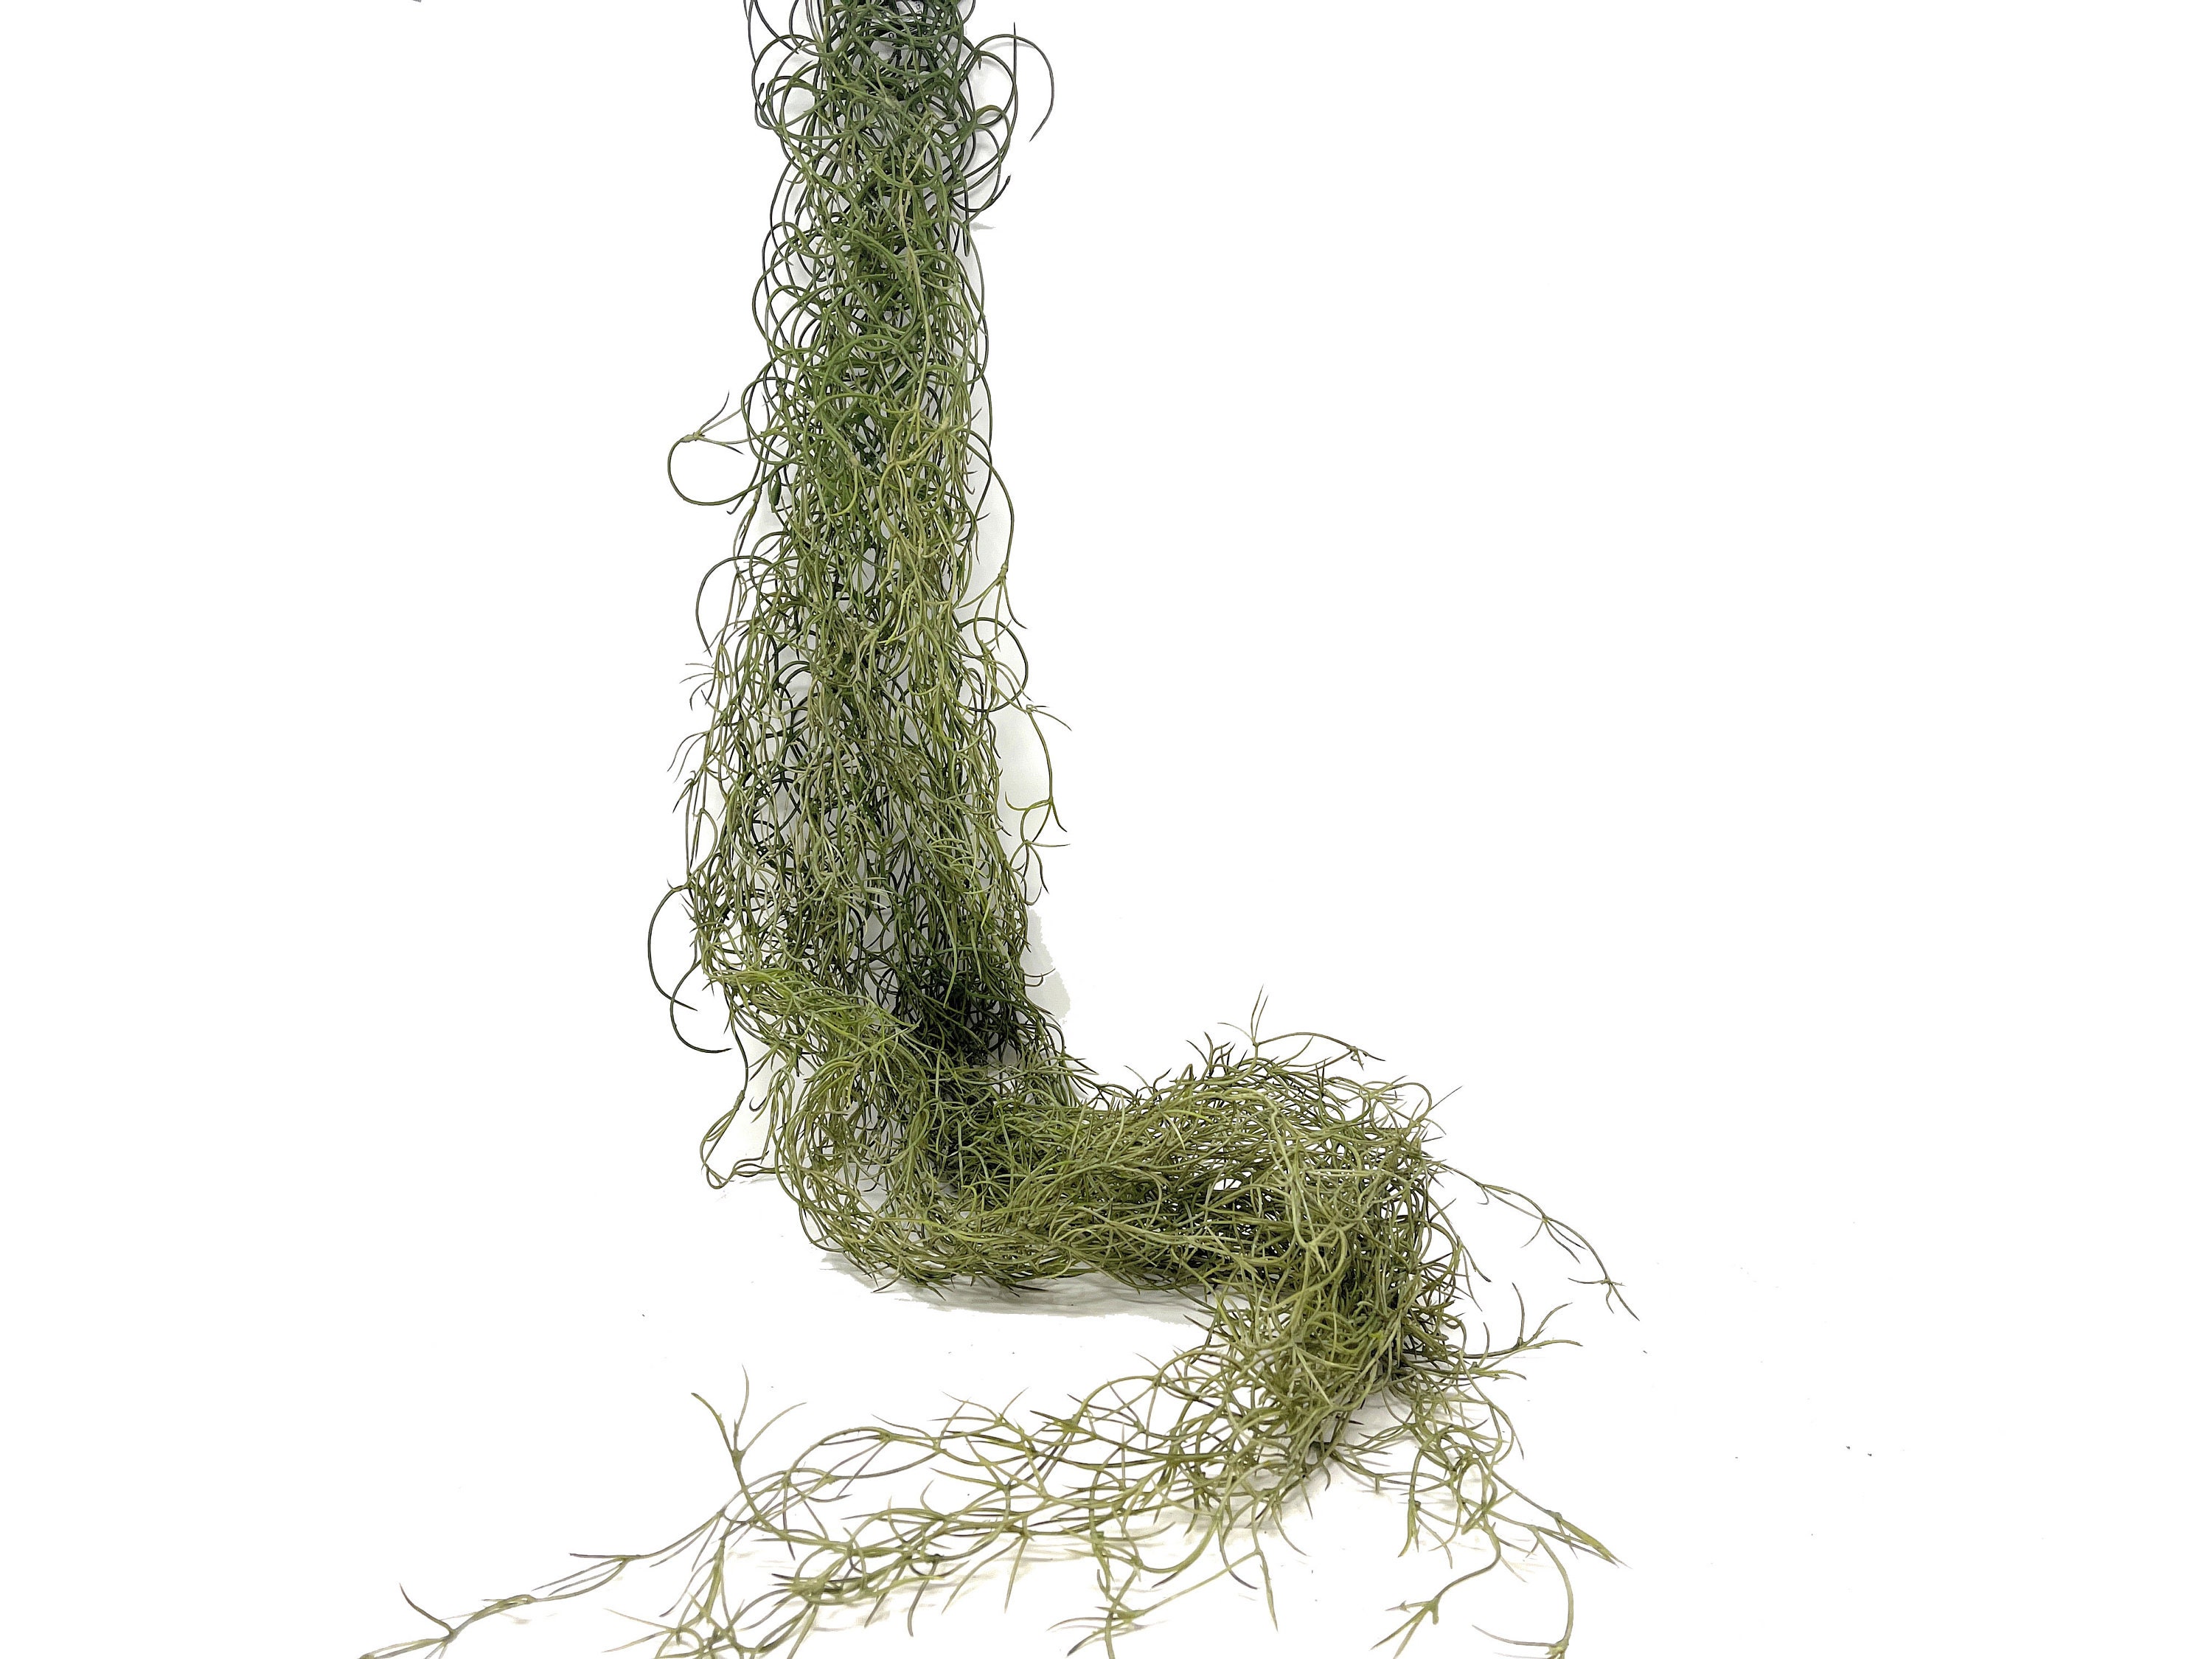 2 Pcs Artificial Hanging Plants Fake Spanish Moss, Faux Spanish